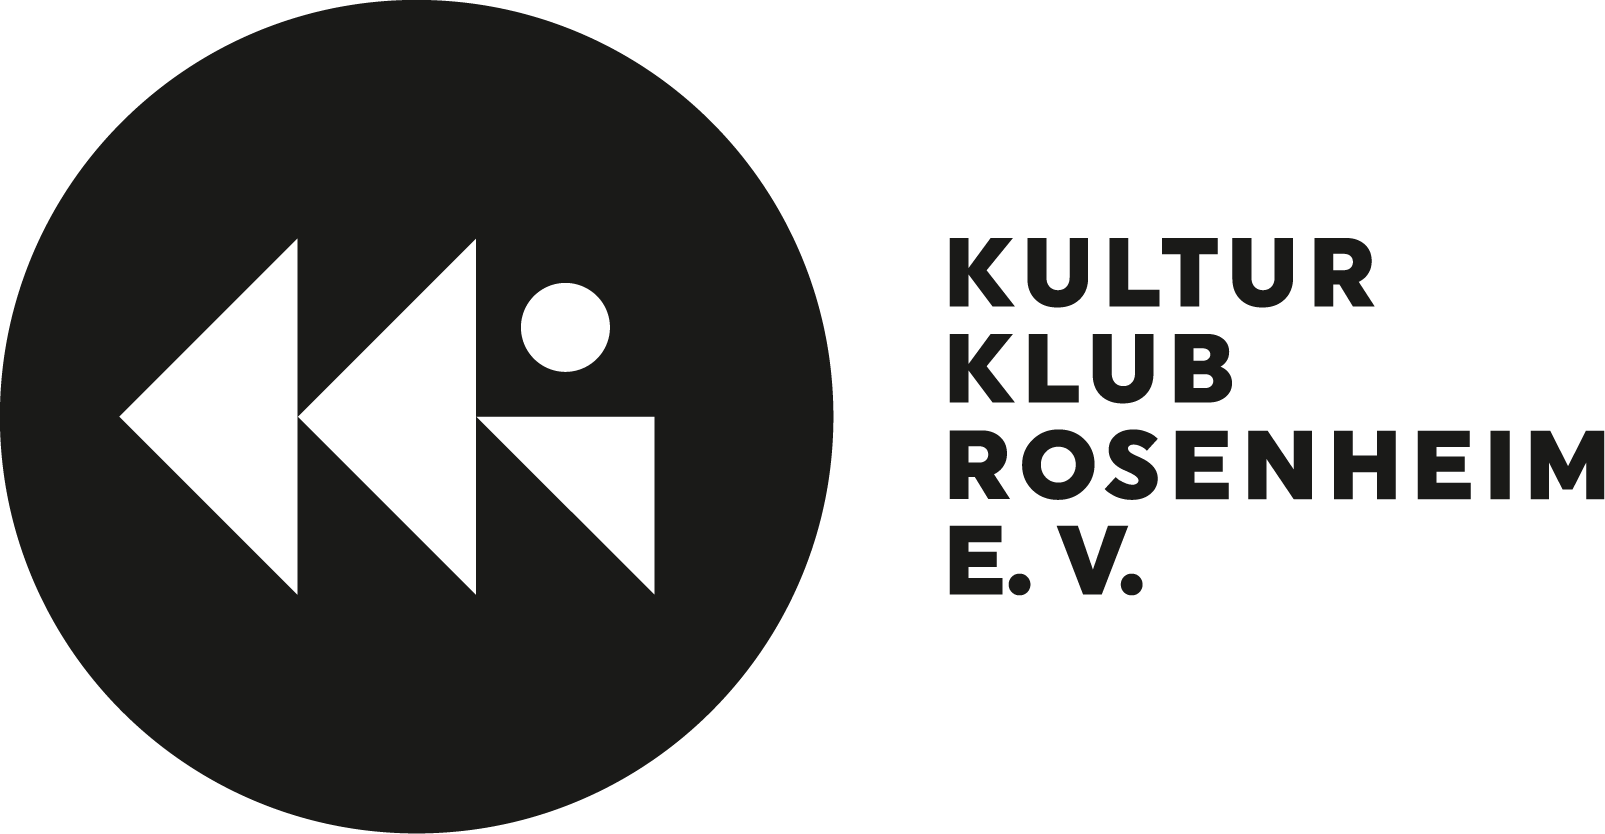 KulturKlub Rosenheim